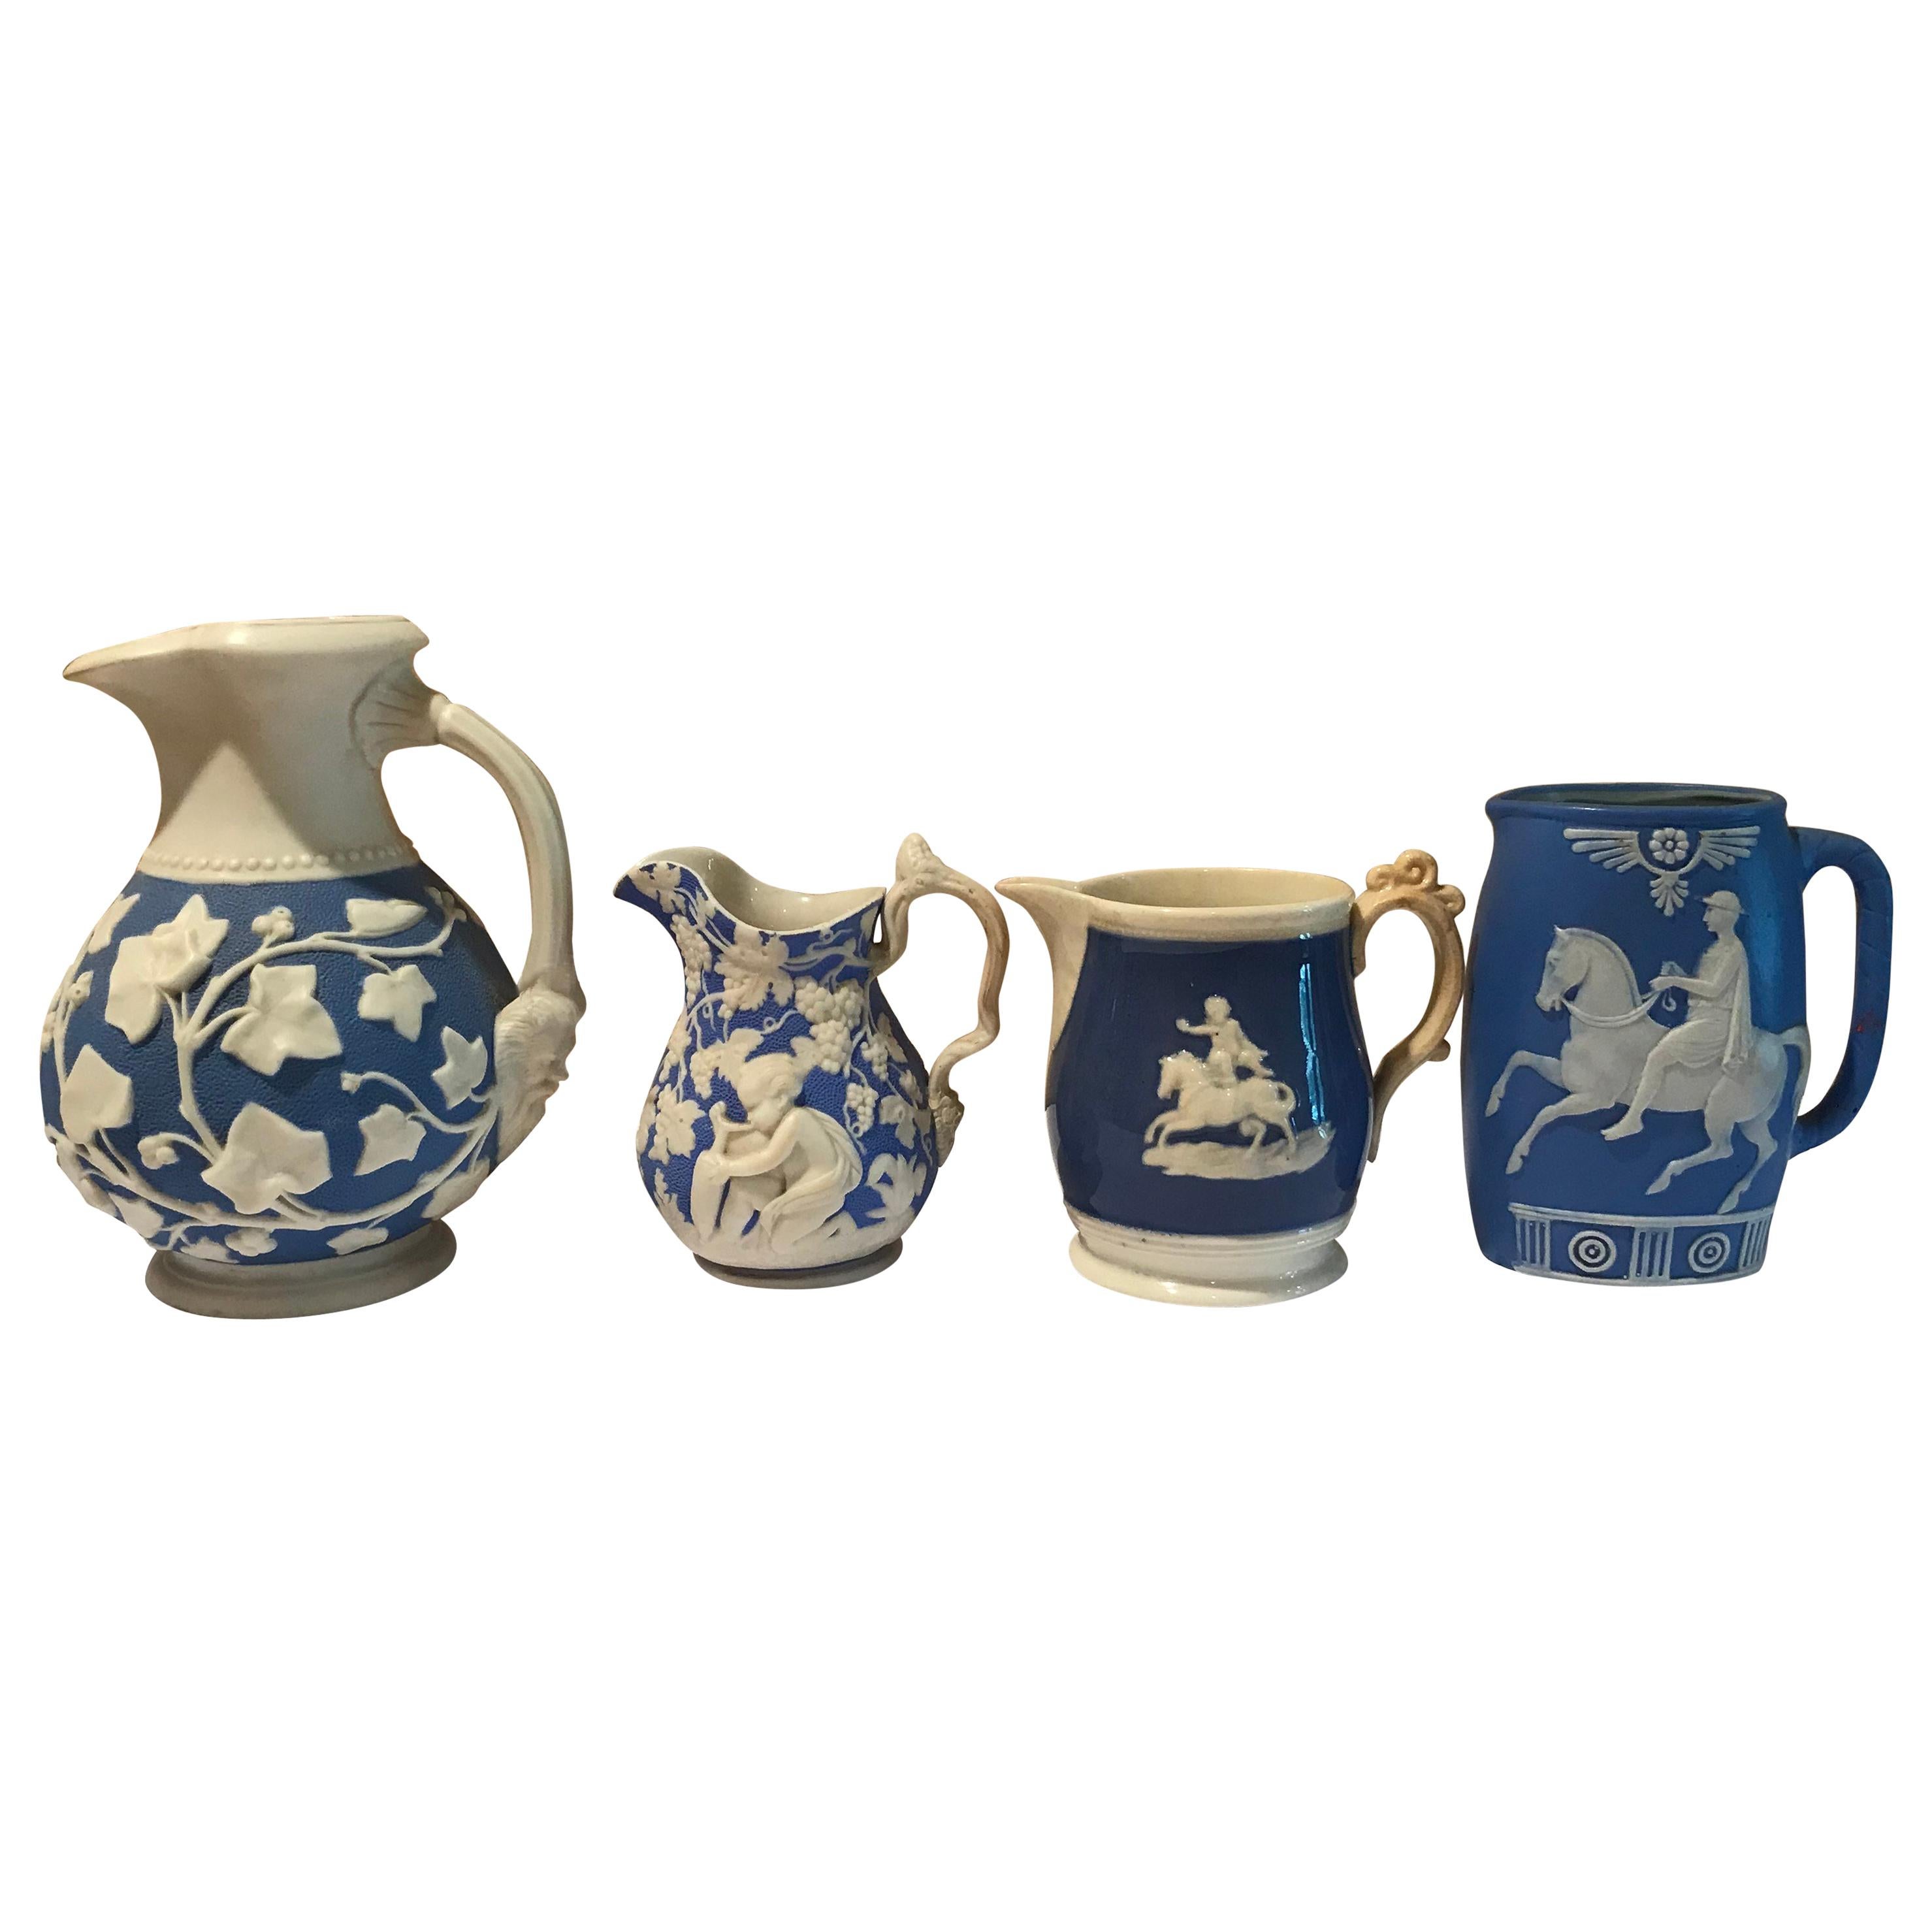 Lot of Four (4) 19th Century Porcelain Creamers pr Jugs For Sale